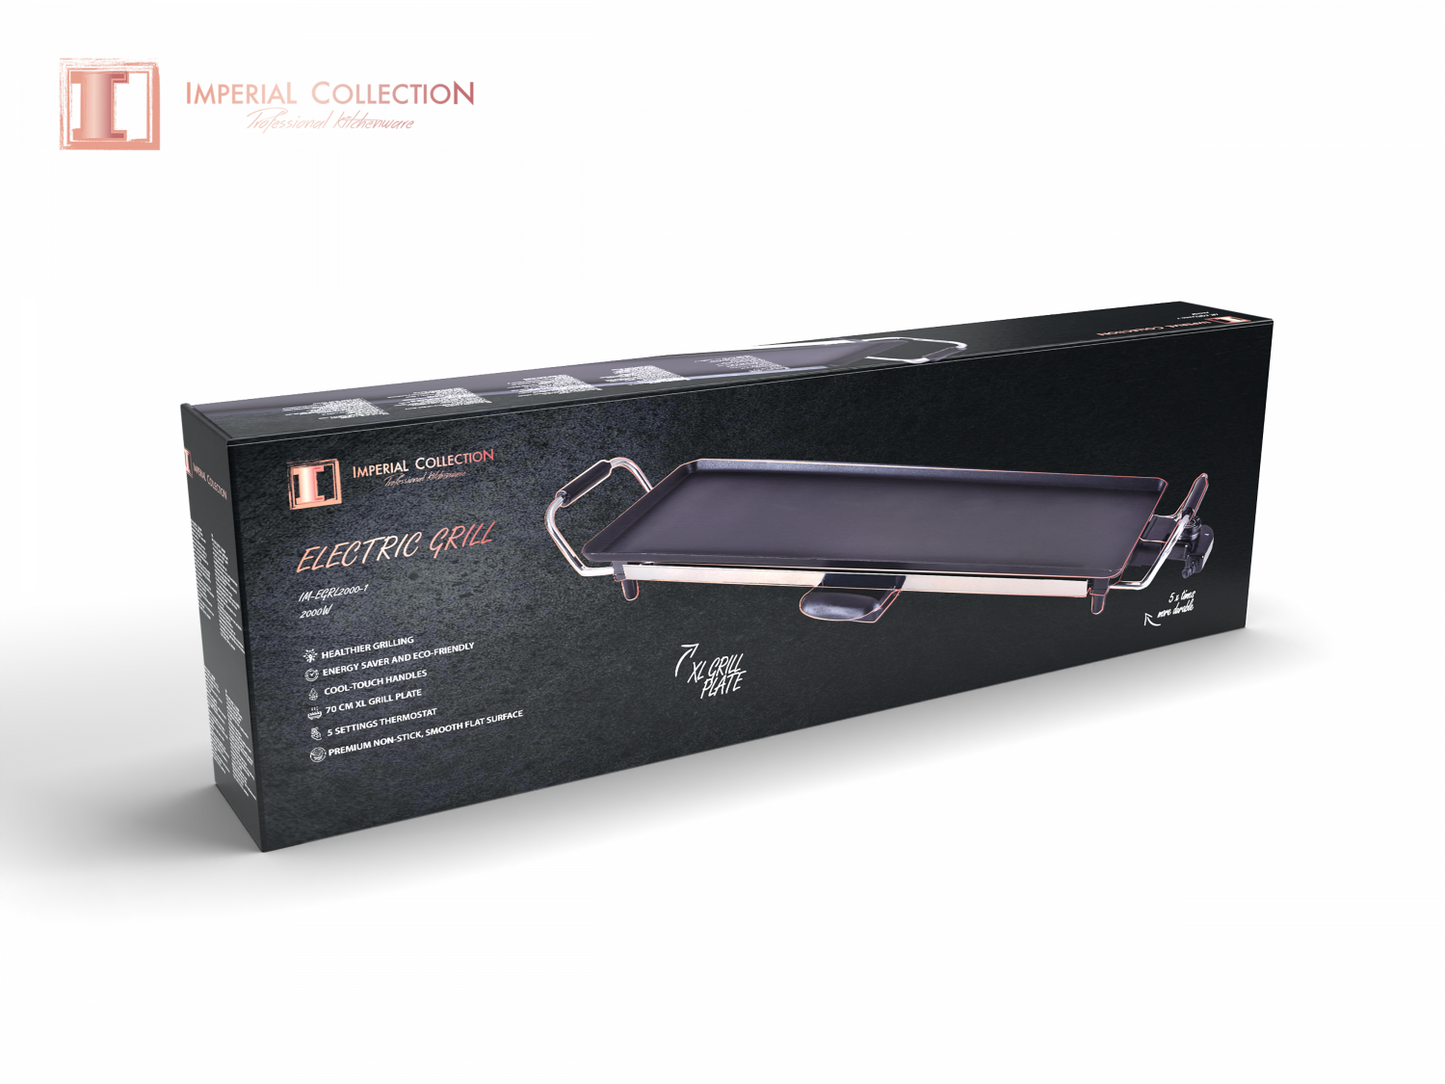 Imperial Collection 90cm elektrisk multigrill